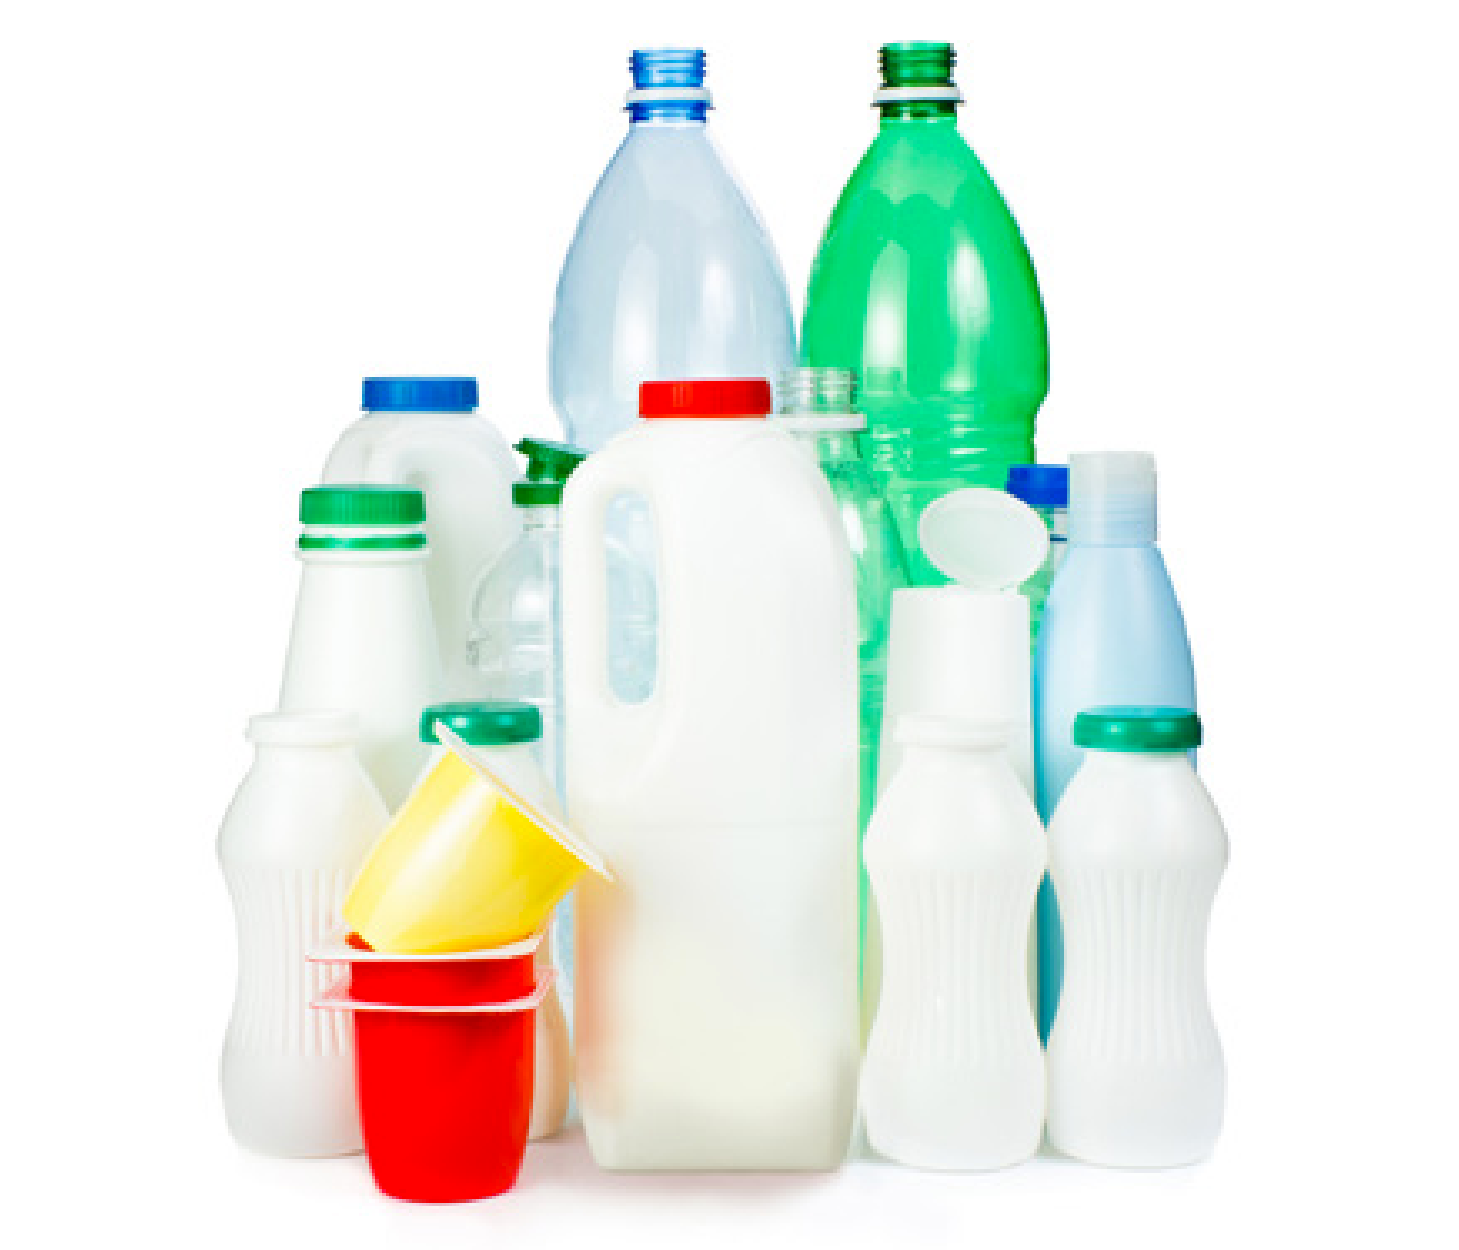 Plastic Bottle Recycling